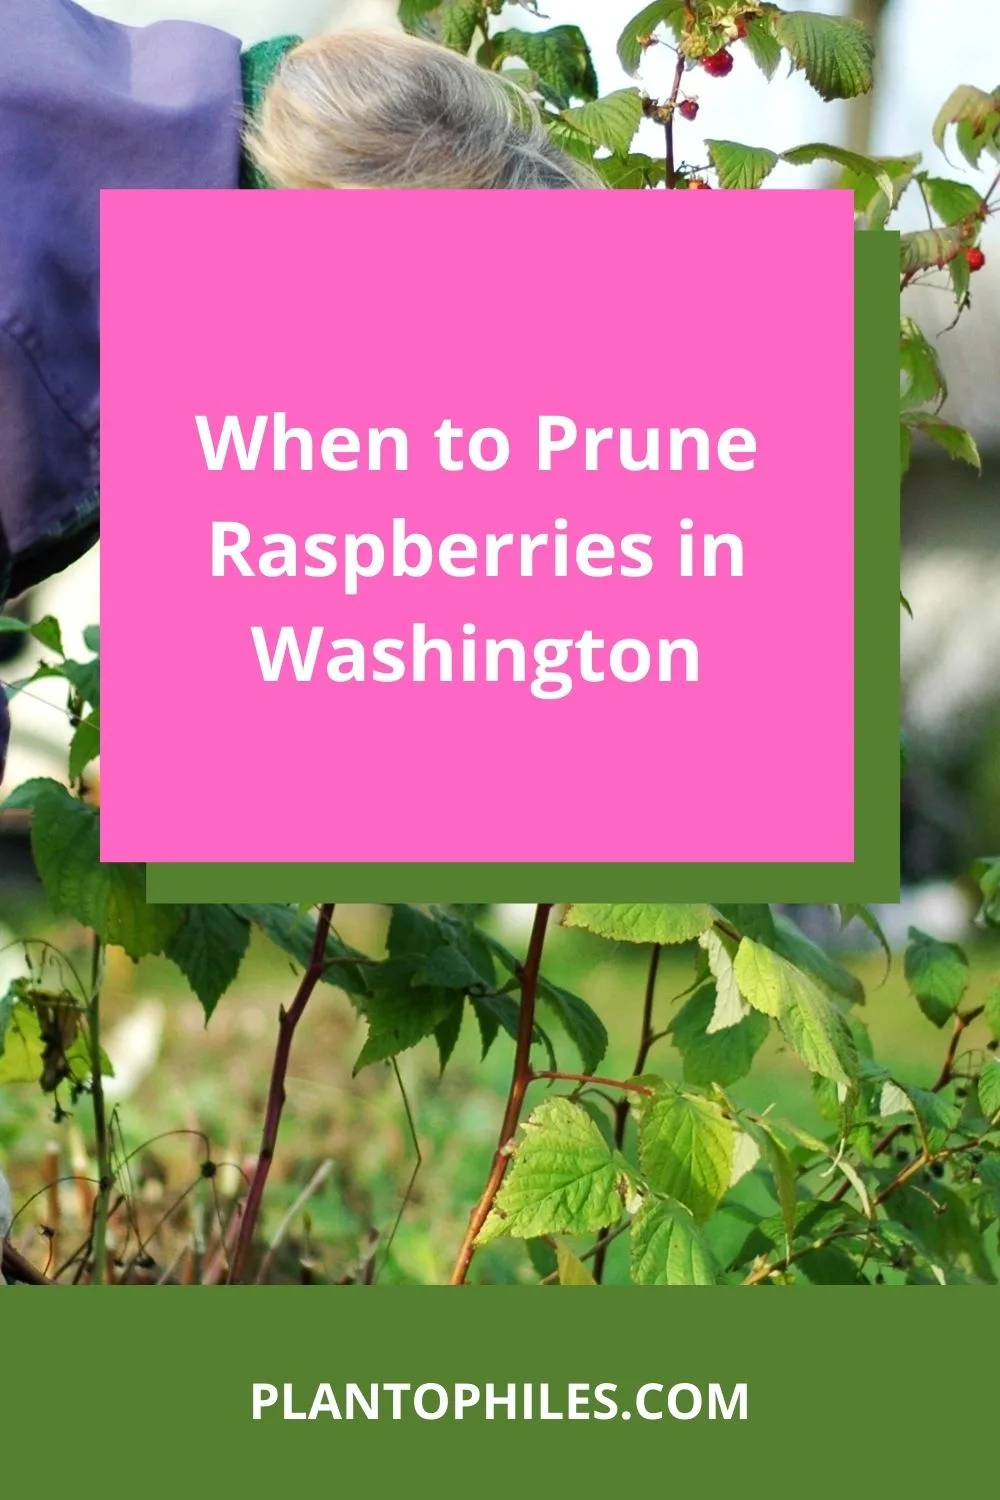 When to Prune Raspberries in Washington